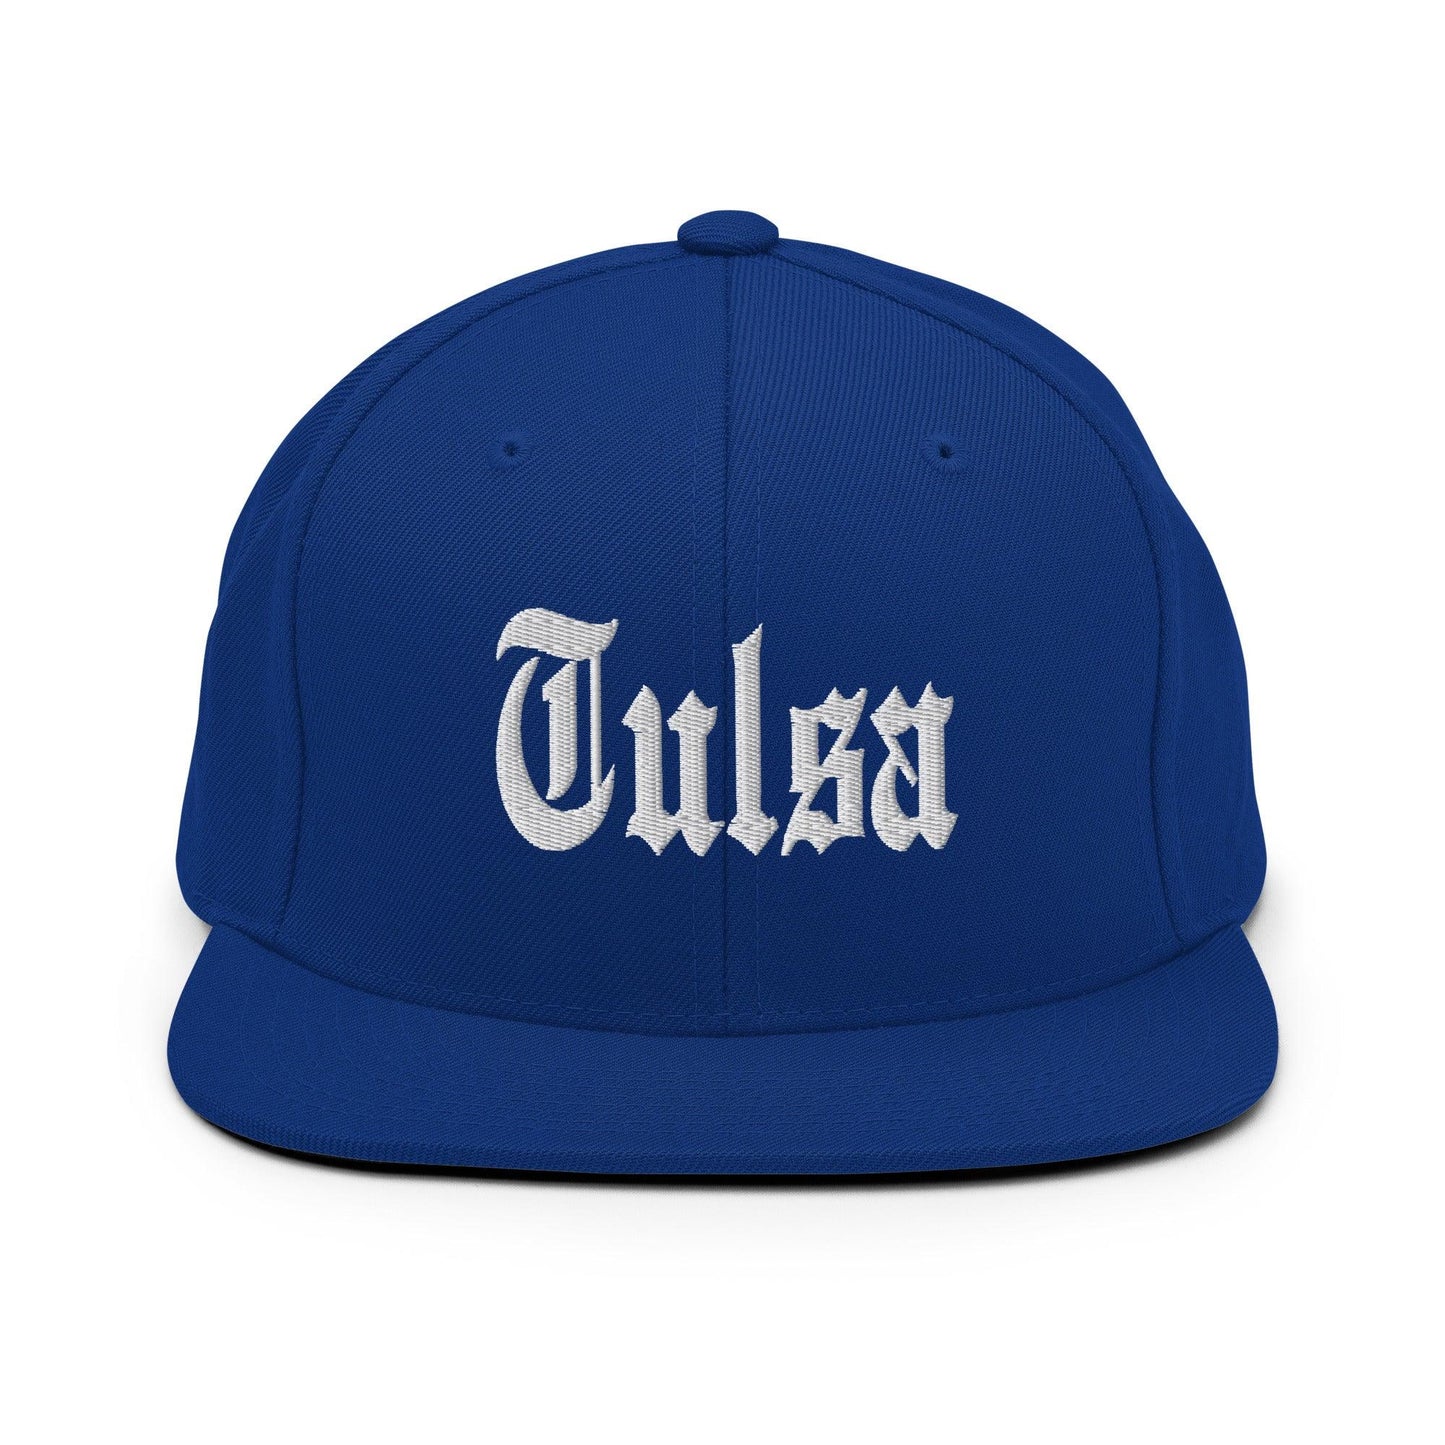 Tulsa OG Old English Snapback Hat Royal Blue